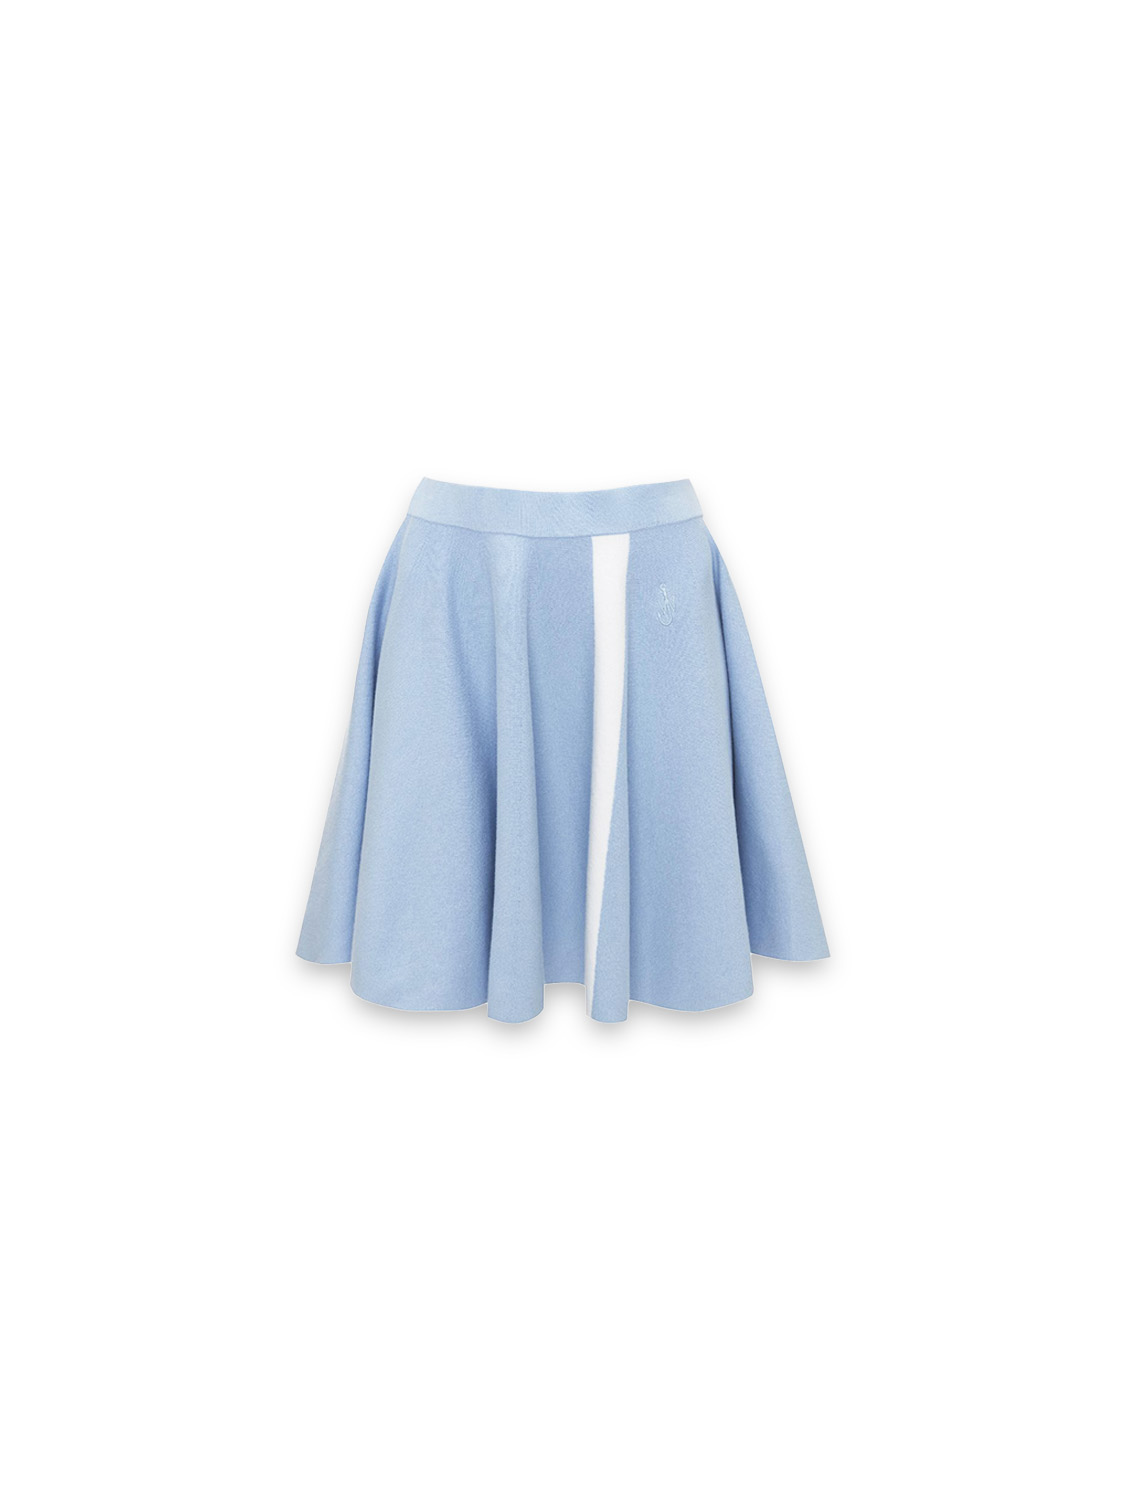 Contrast Mini - Stretchy cotton blend mini skirt 